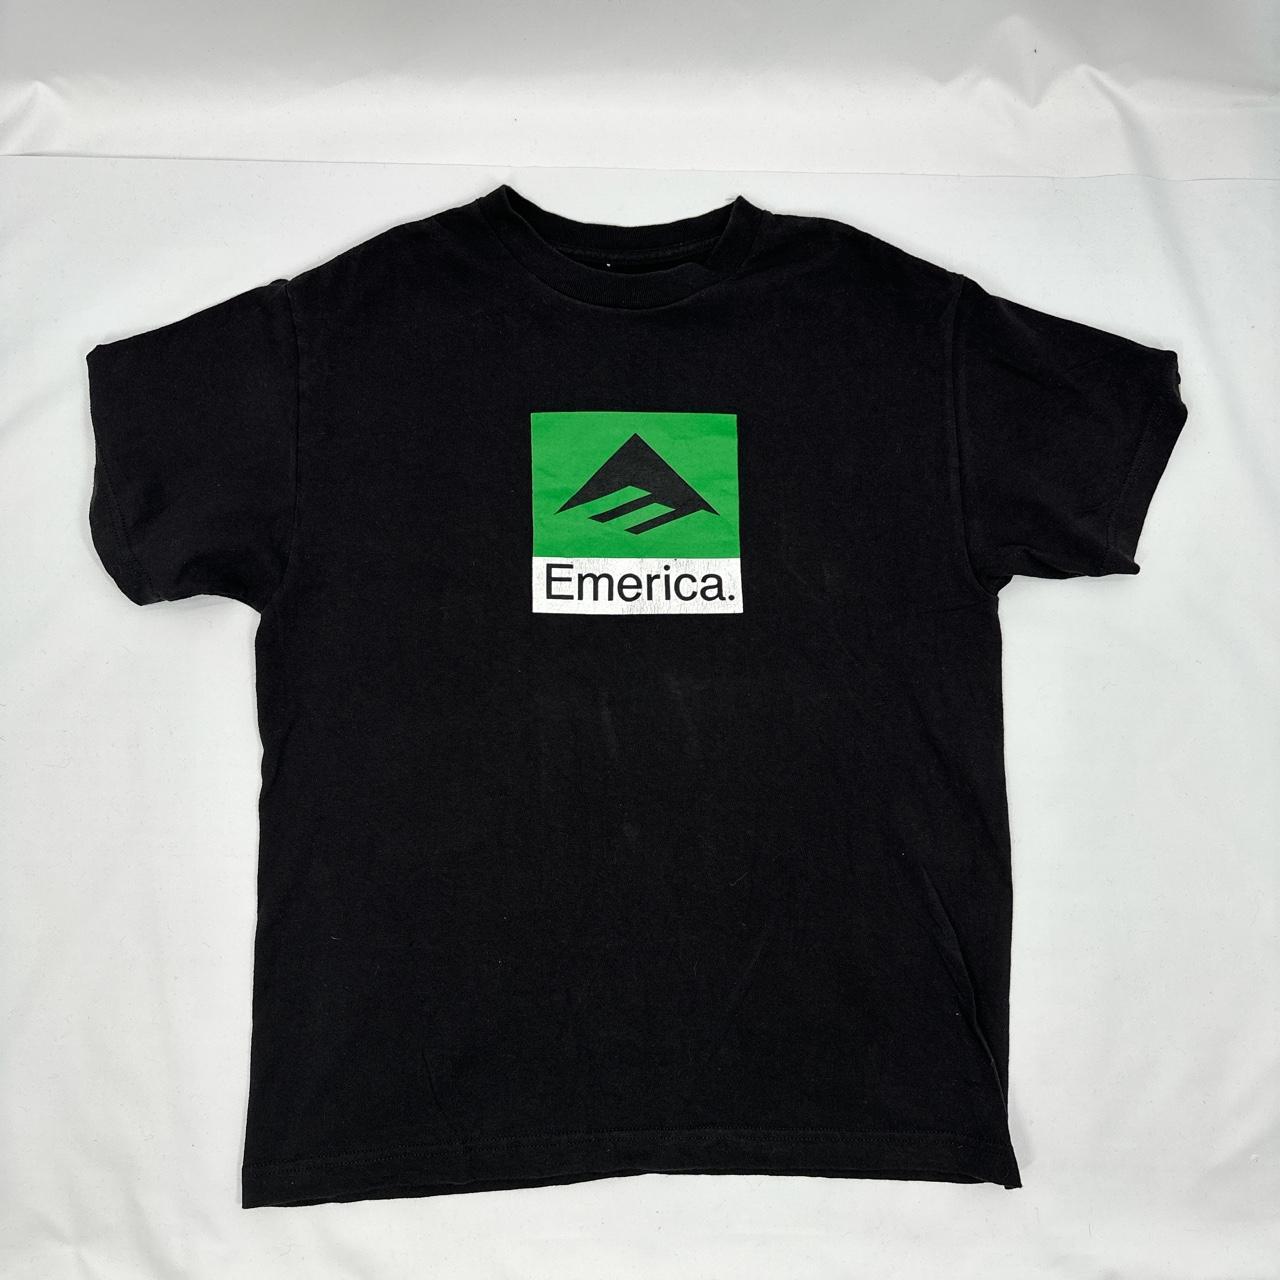 Emerica Men's Black and Green T-shirt